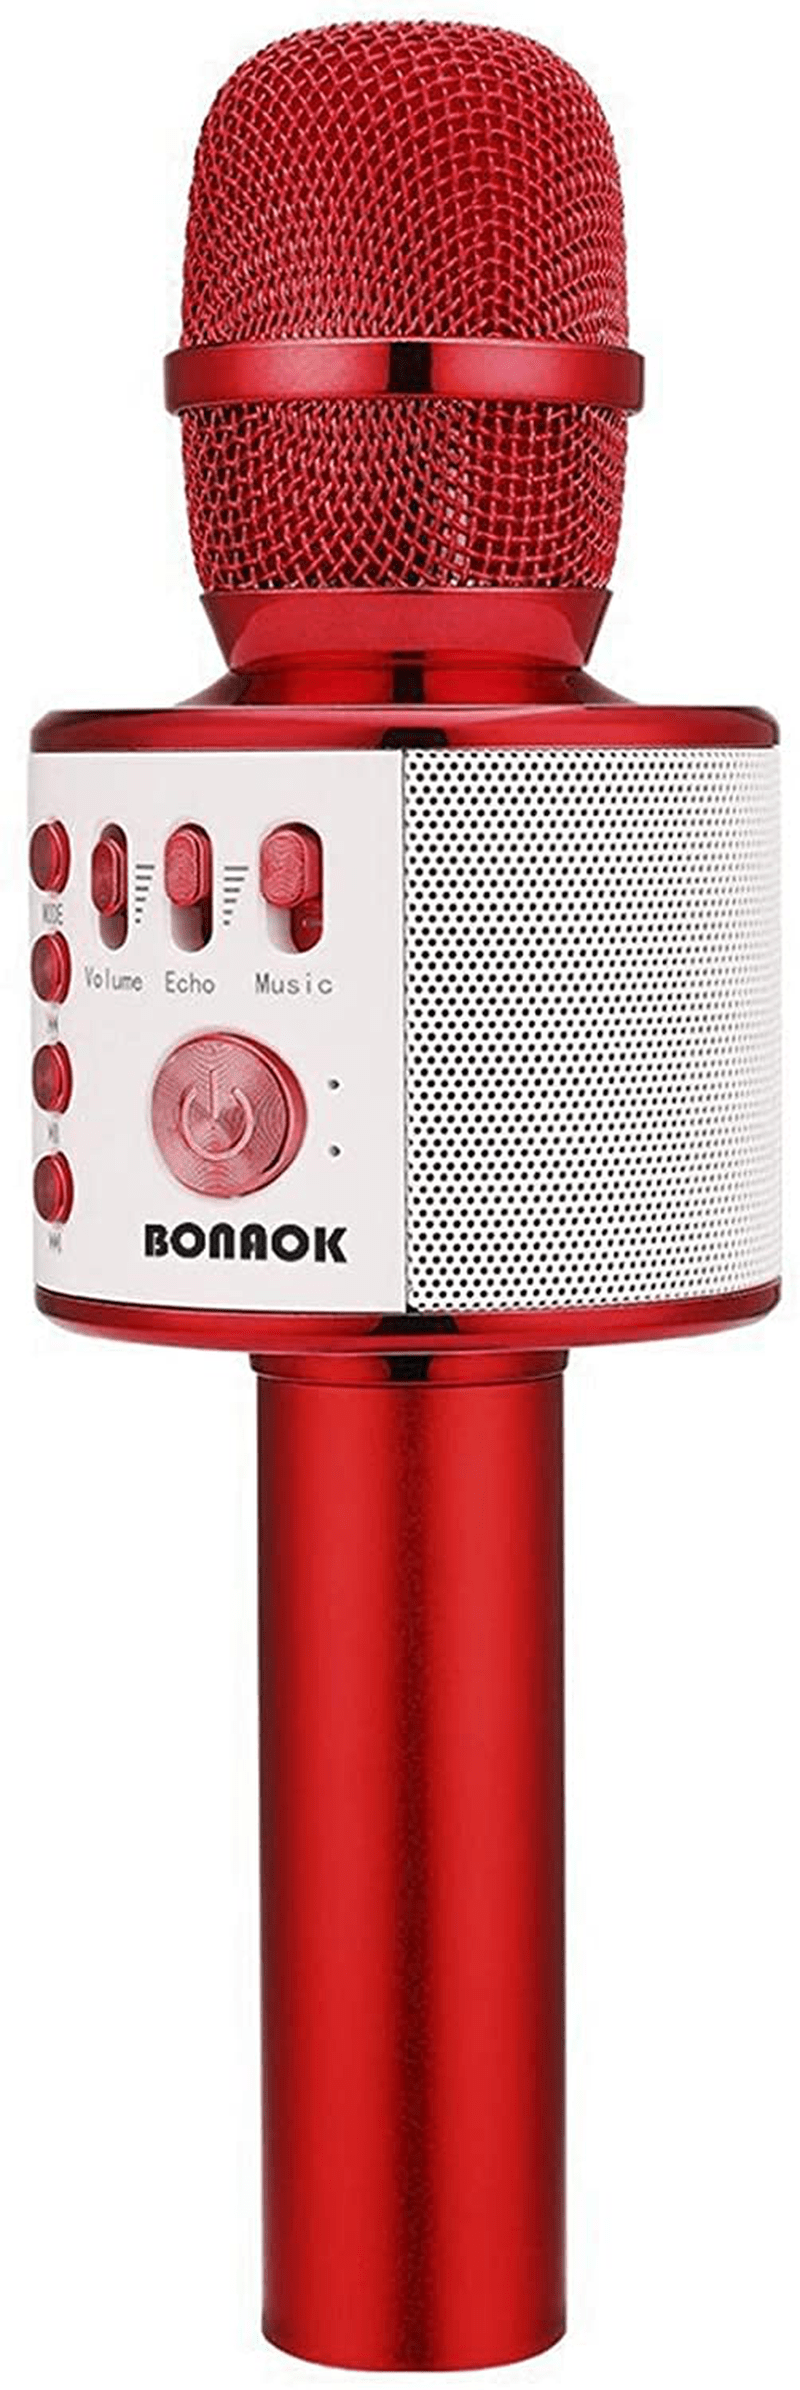 BONAOK Wireless Bluetooth Karaoke Microphone,3-in-1 Portable Handheld Karaoke Mic Speaker Machine Home Party Birthday for All Smartphones PC(Q37 Rose Gold) Electronics > Audio > Audio Components > Microphones BONAOK red  